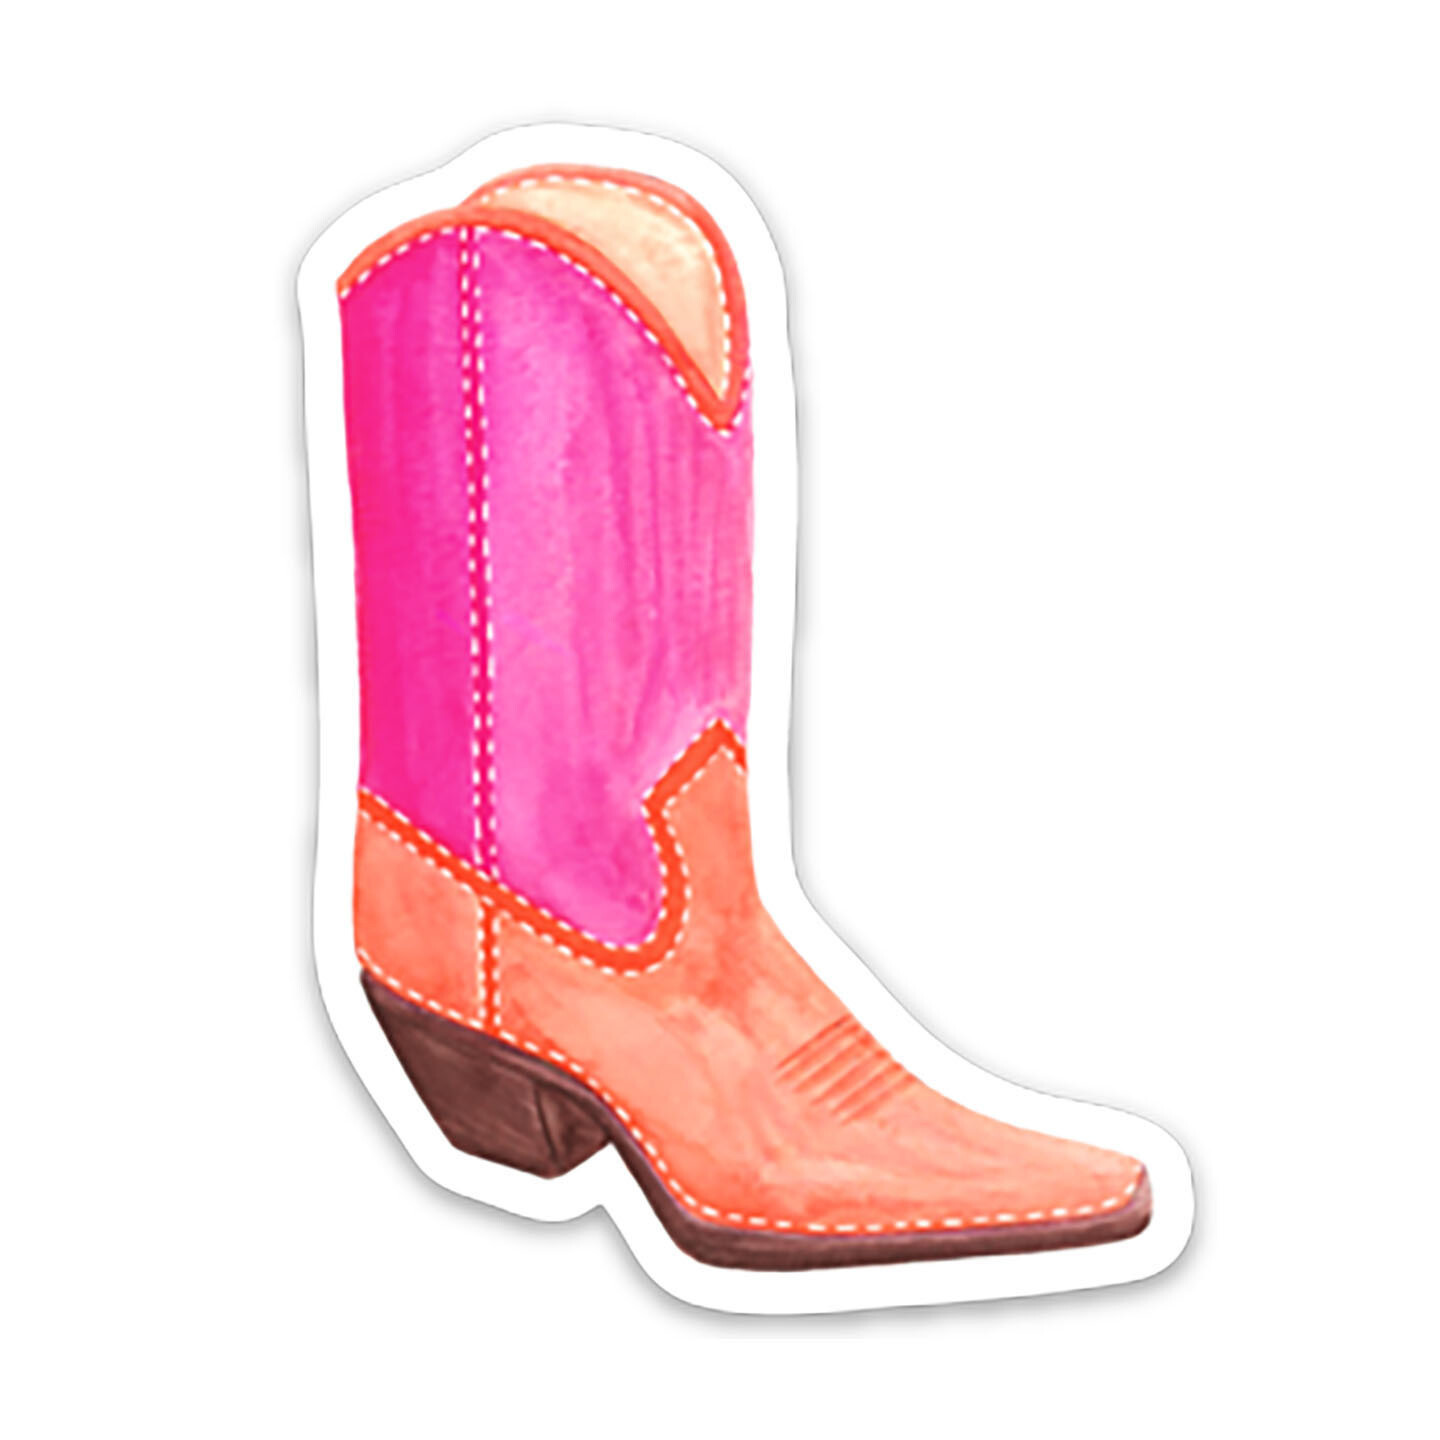 AJ Pink Boot Sticker